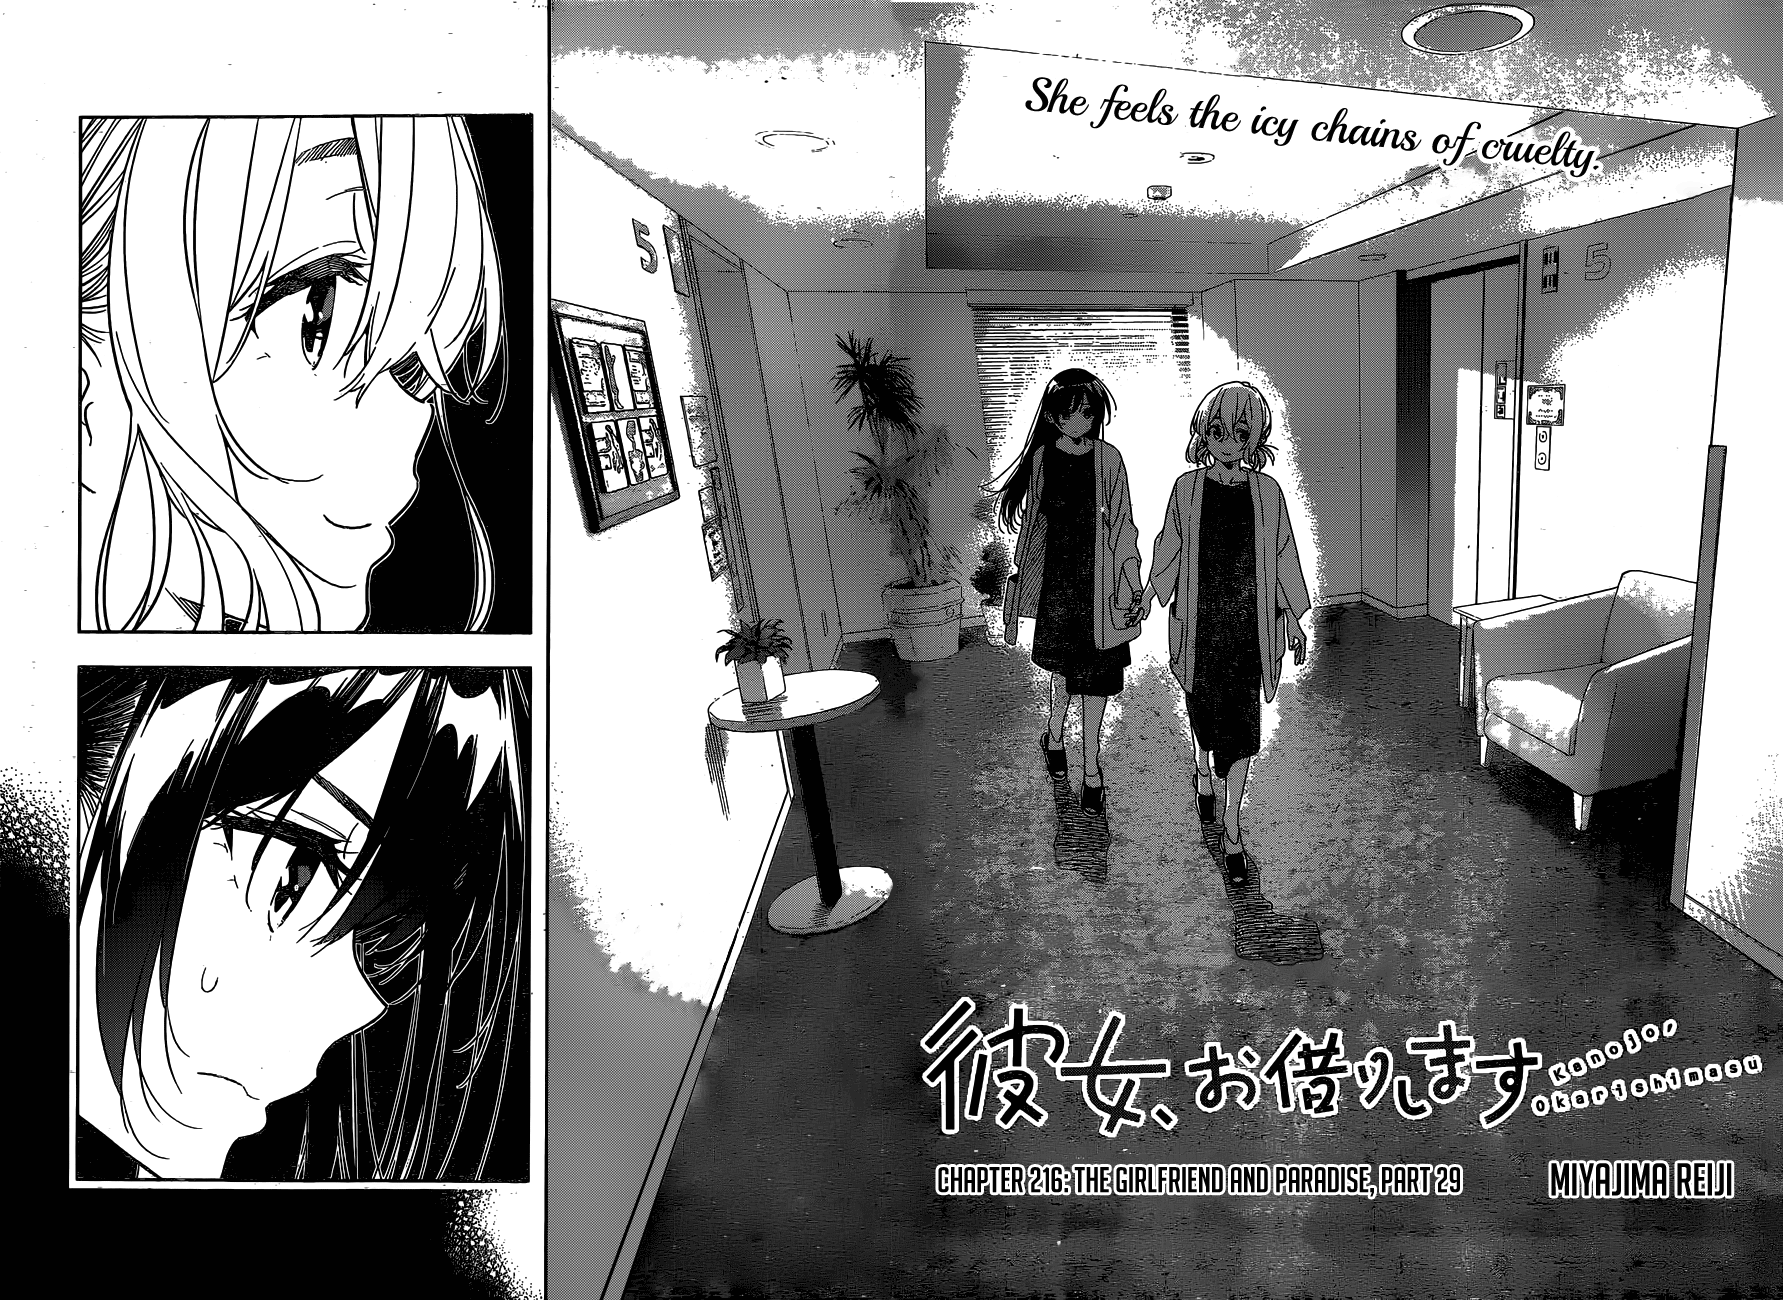 Rent a Girlfriend chapter 216, kanojo okarishimasu chapter 216